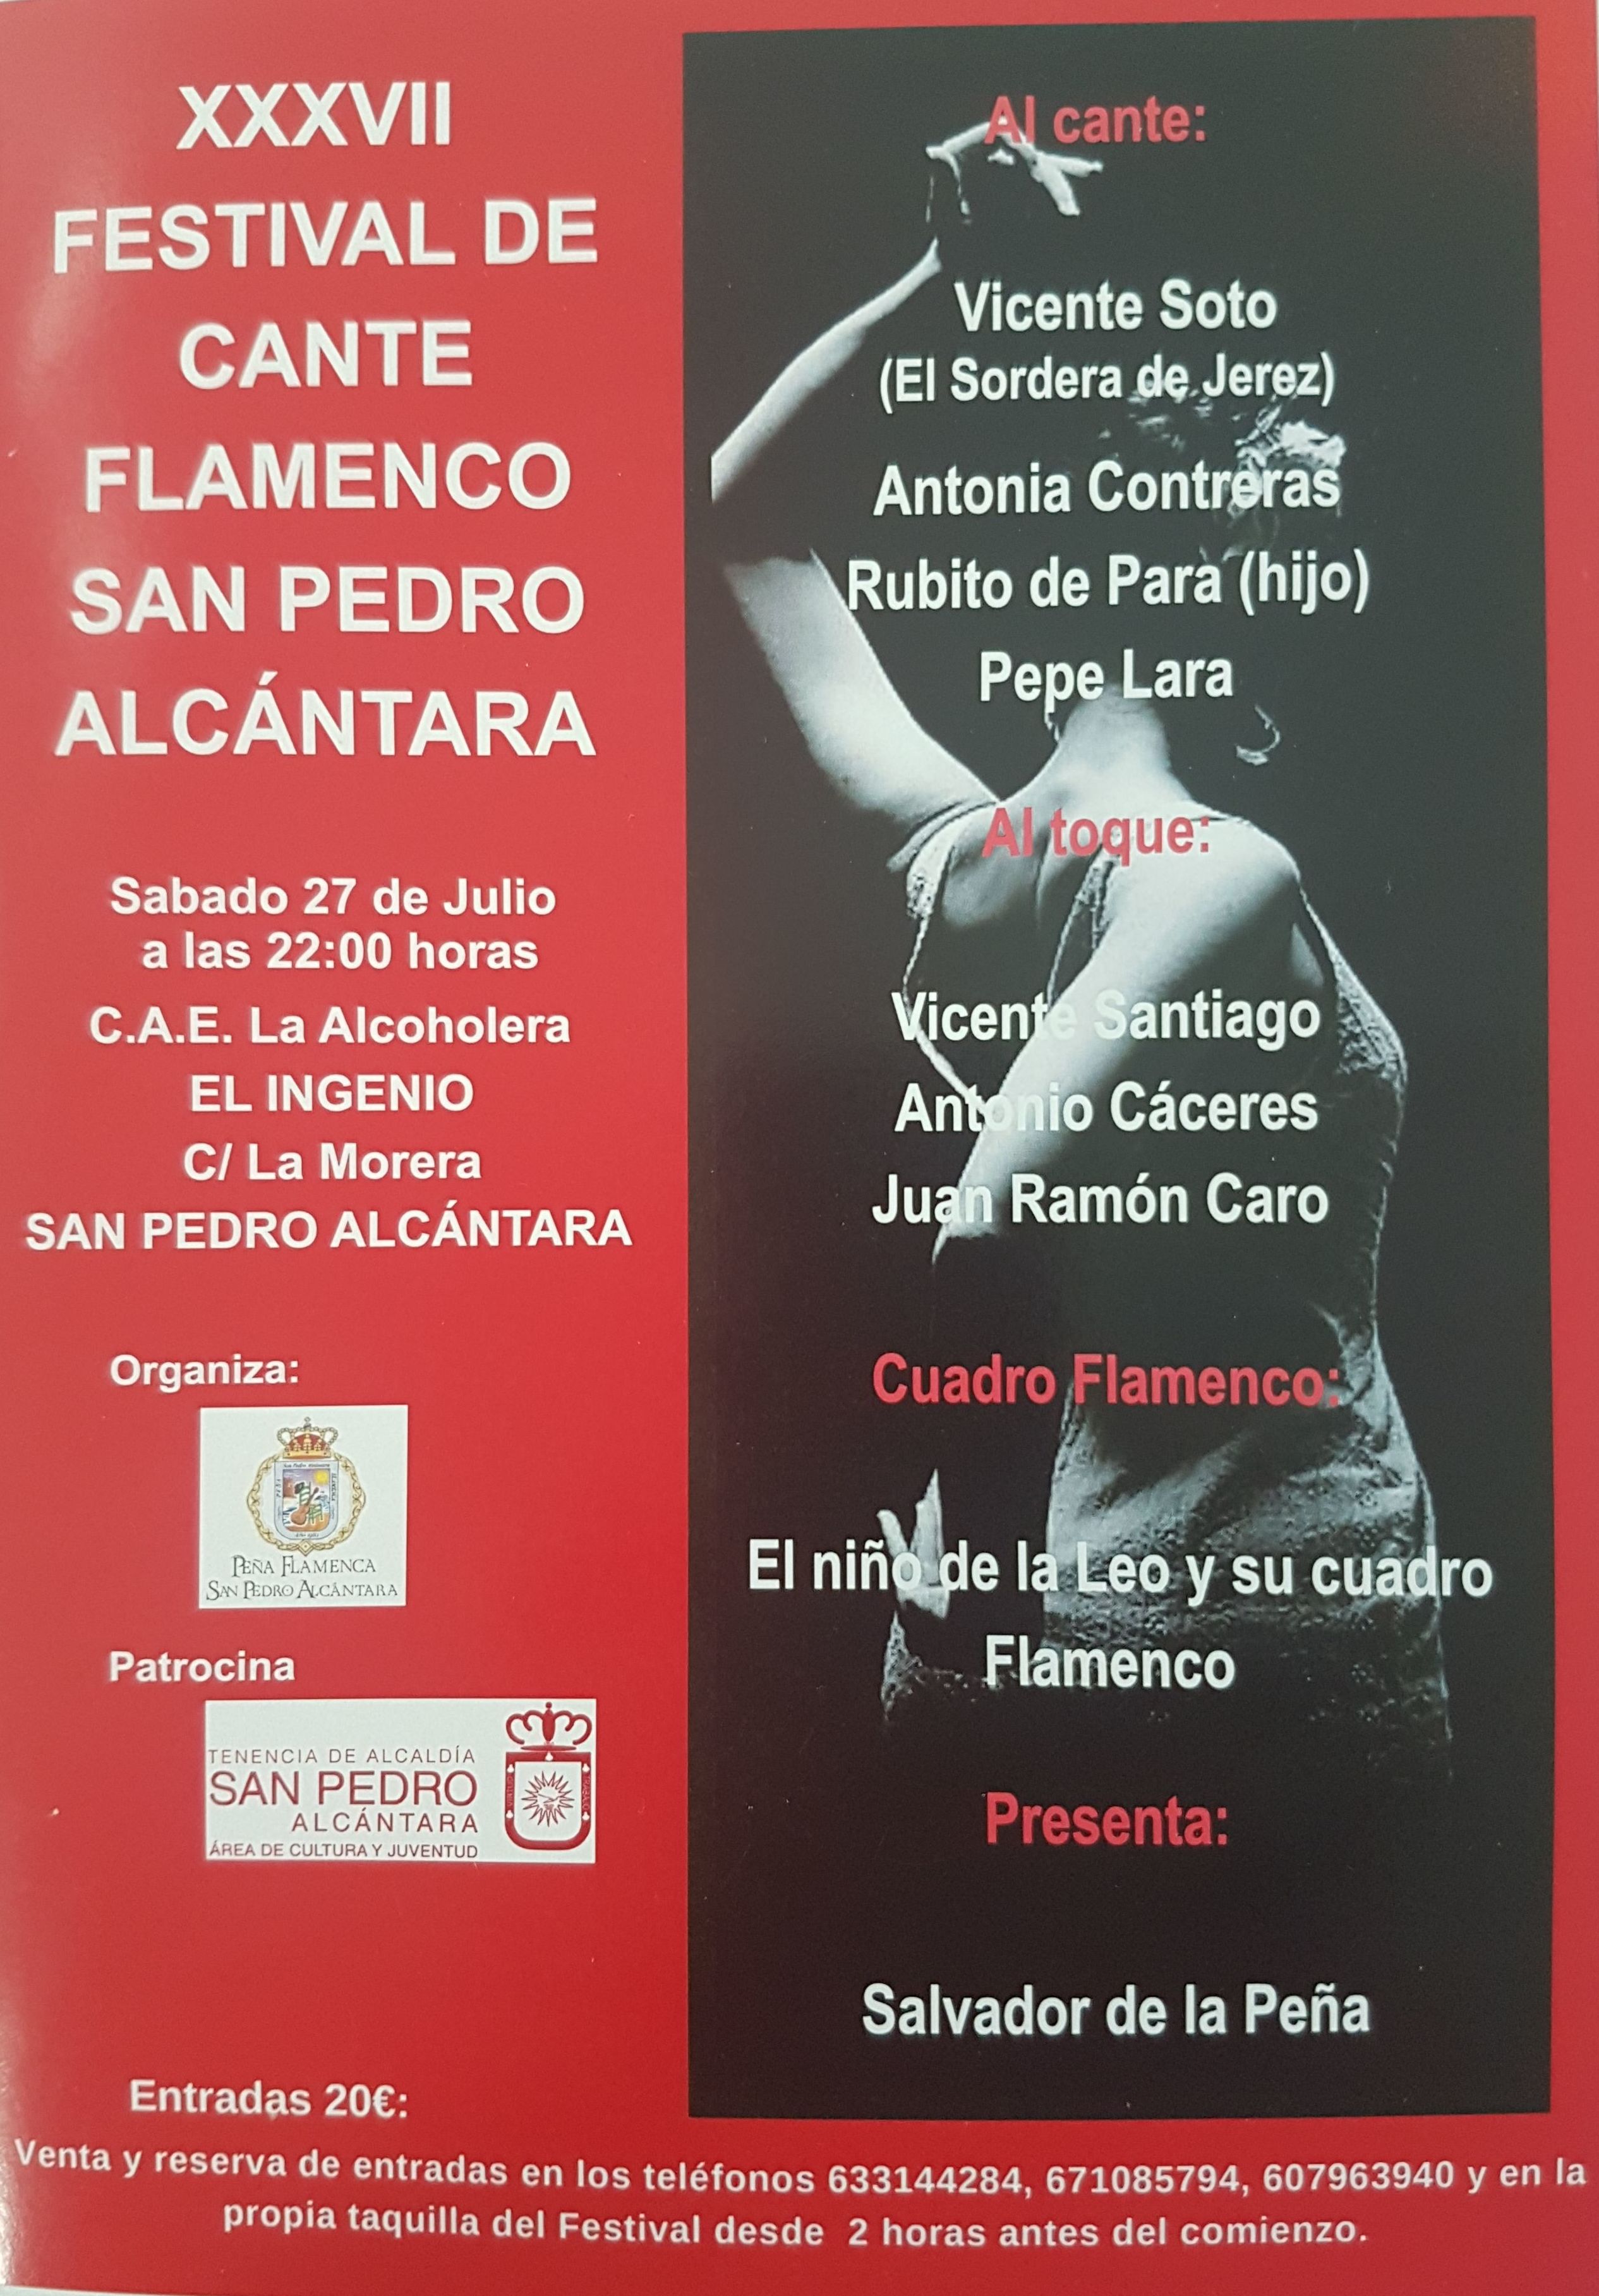 Patrocinamos el XXXVII Festival de Cante Flamenco de San Pedro Alcántara